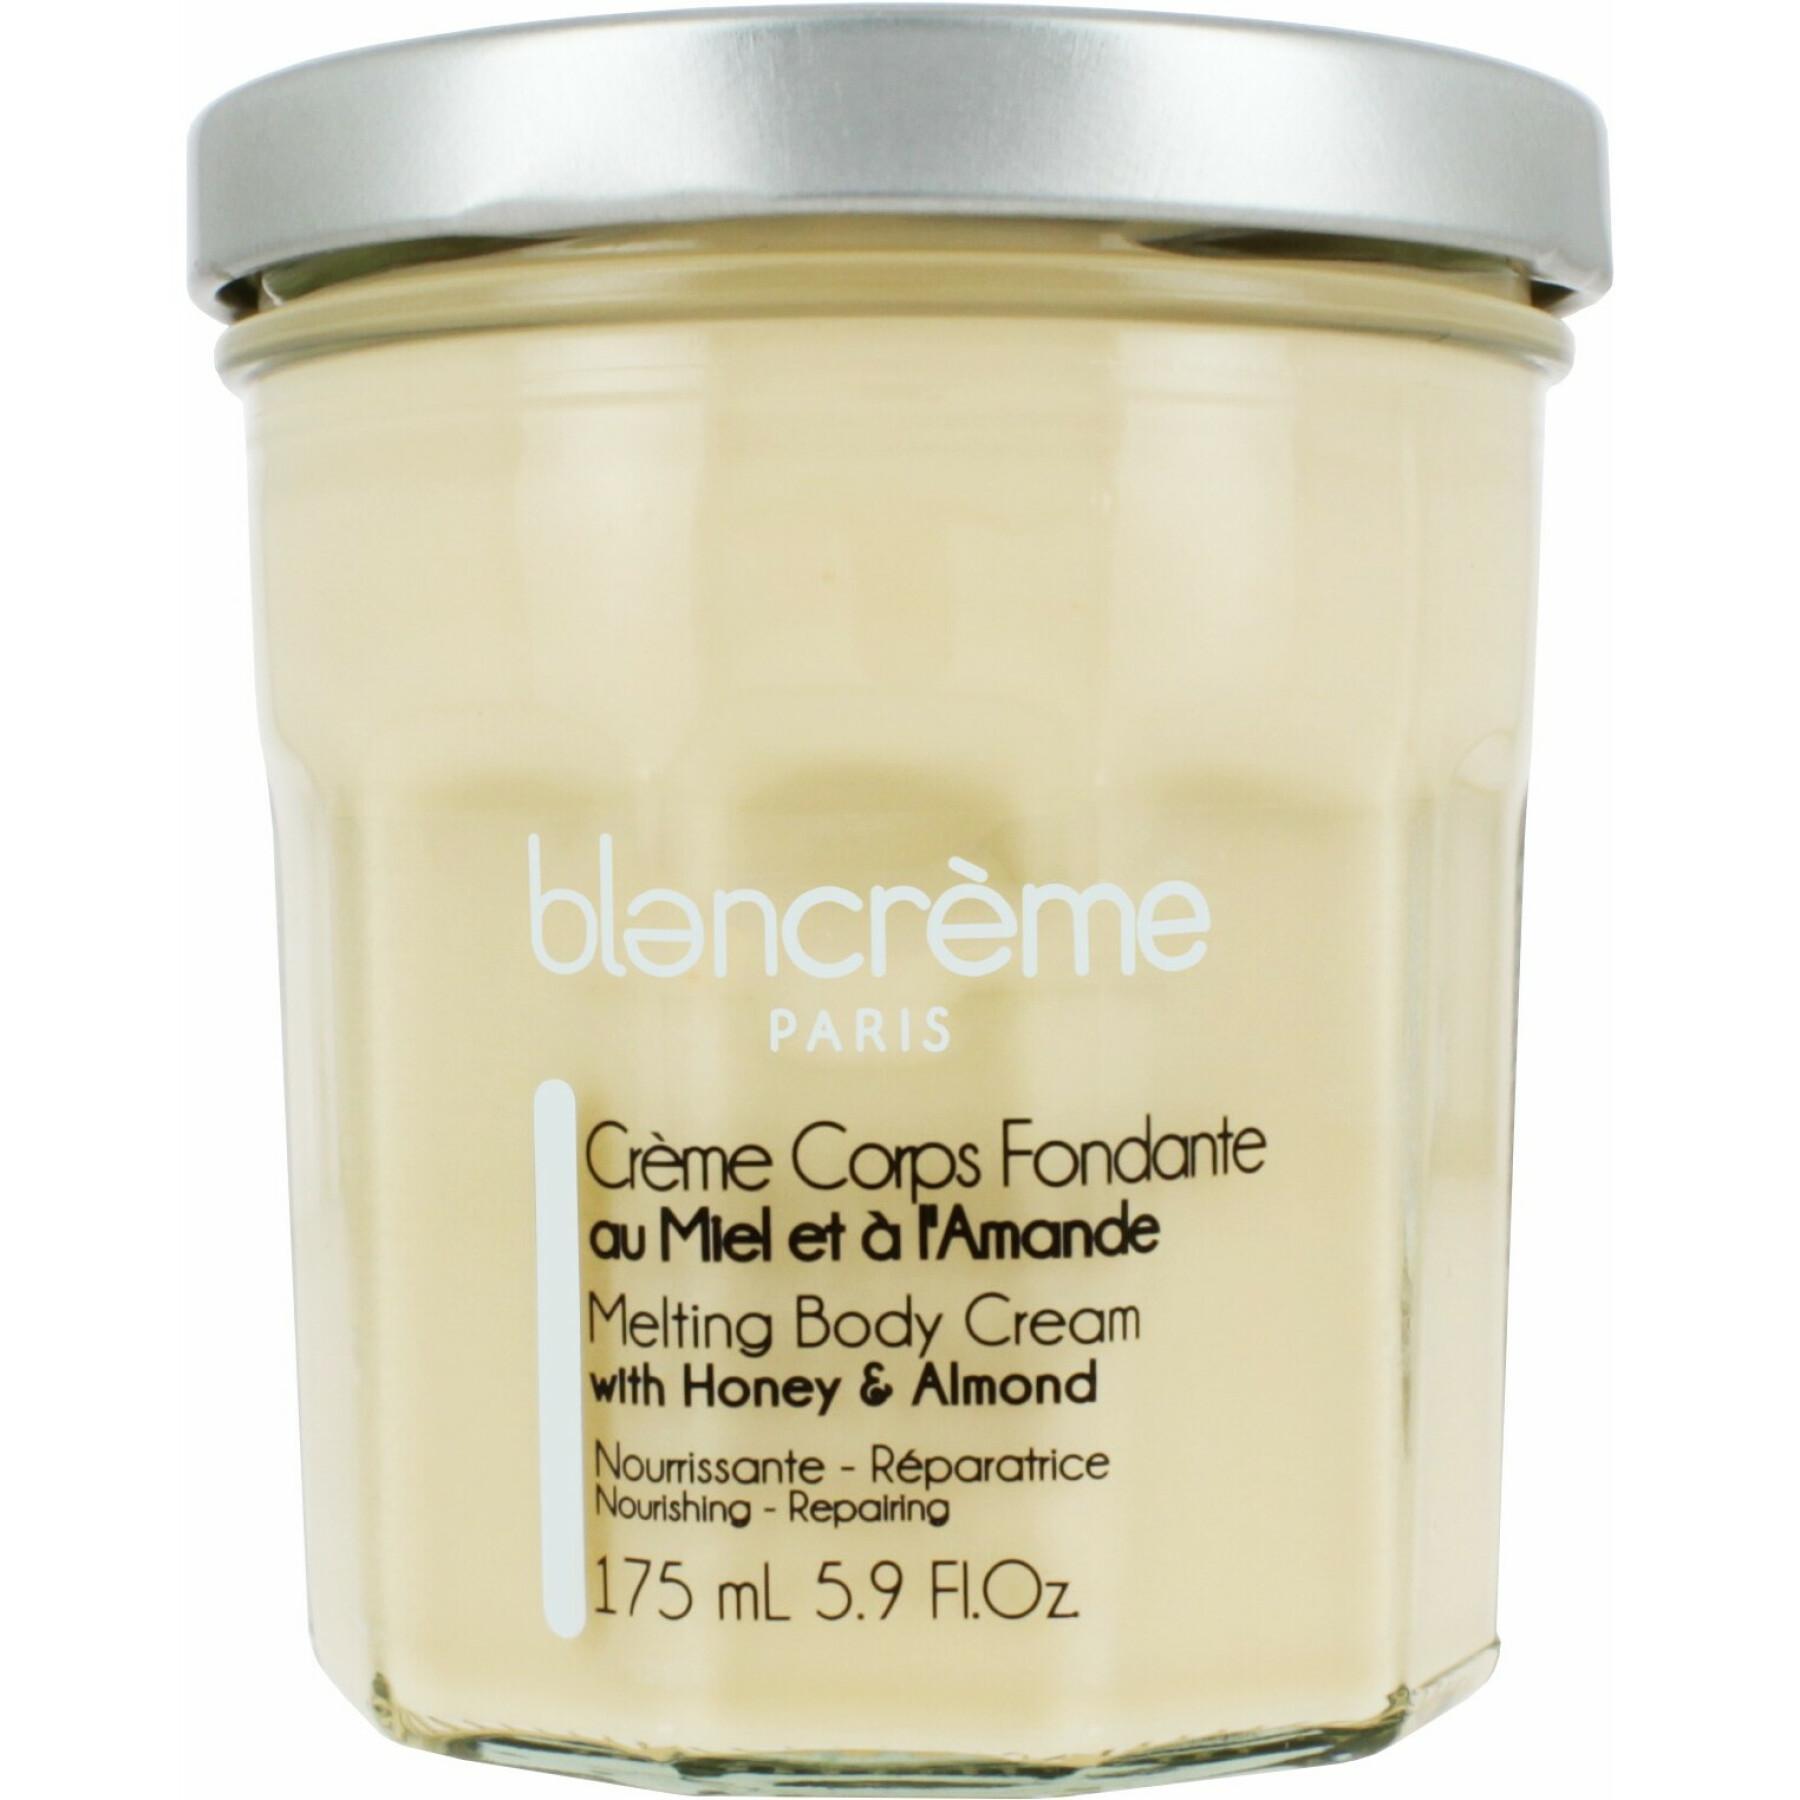 Body cream - honey & almond - Blancreme 175 ml